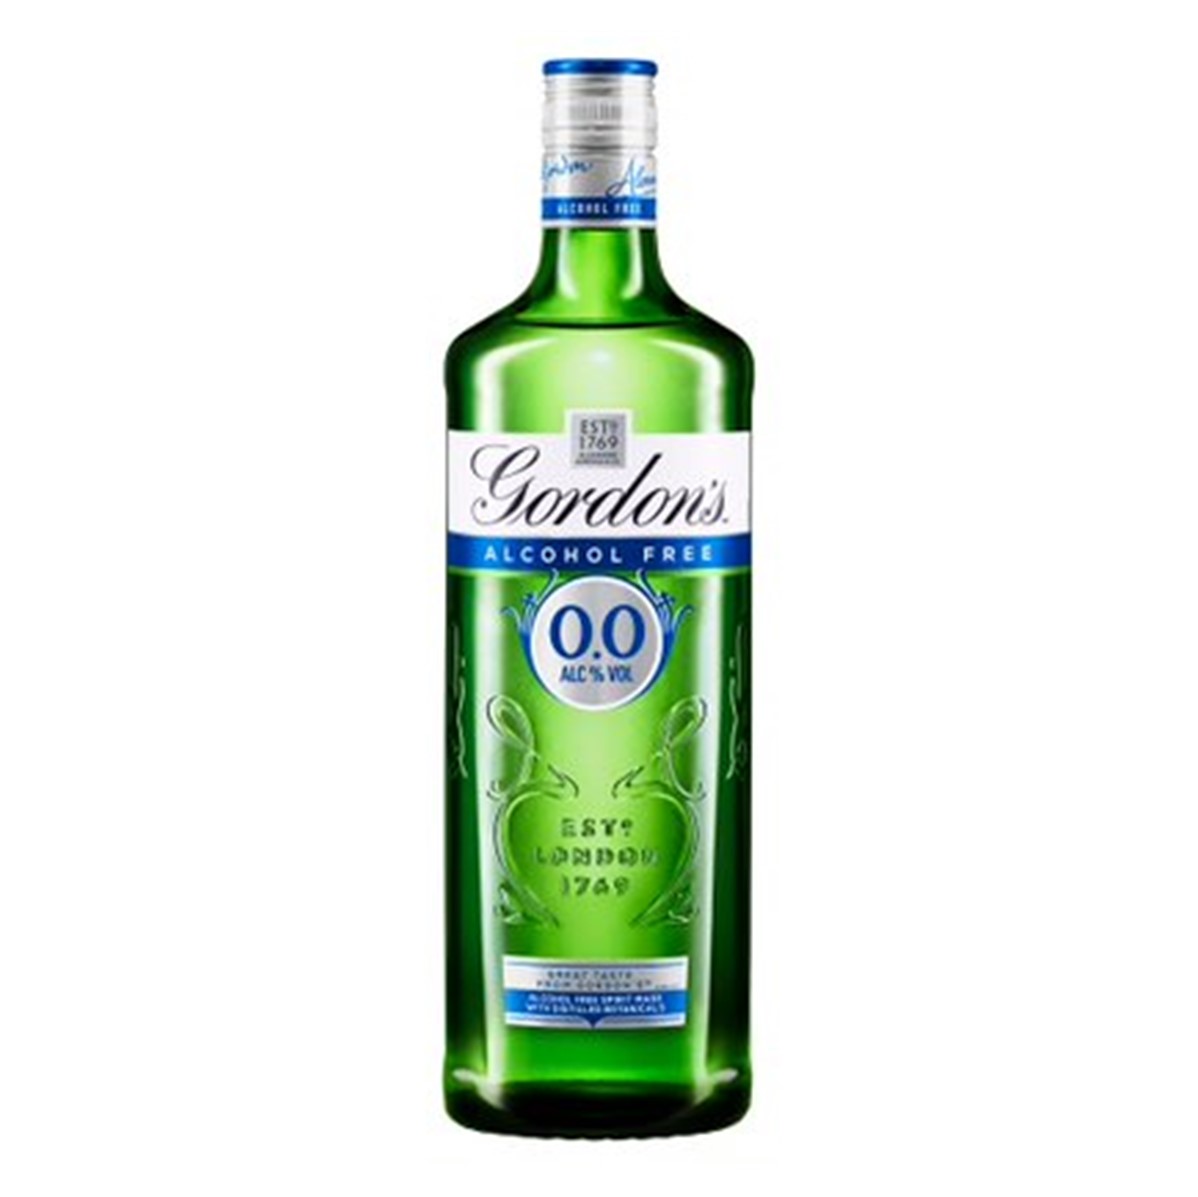 Gordon's Alcohol Free Gin - 70cl bottle